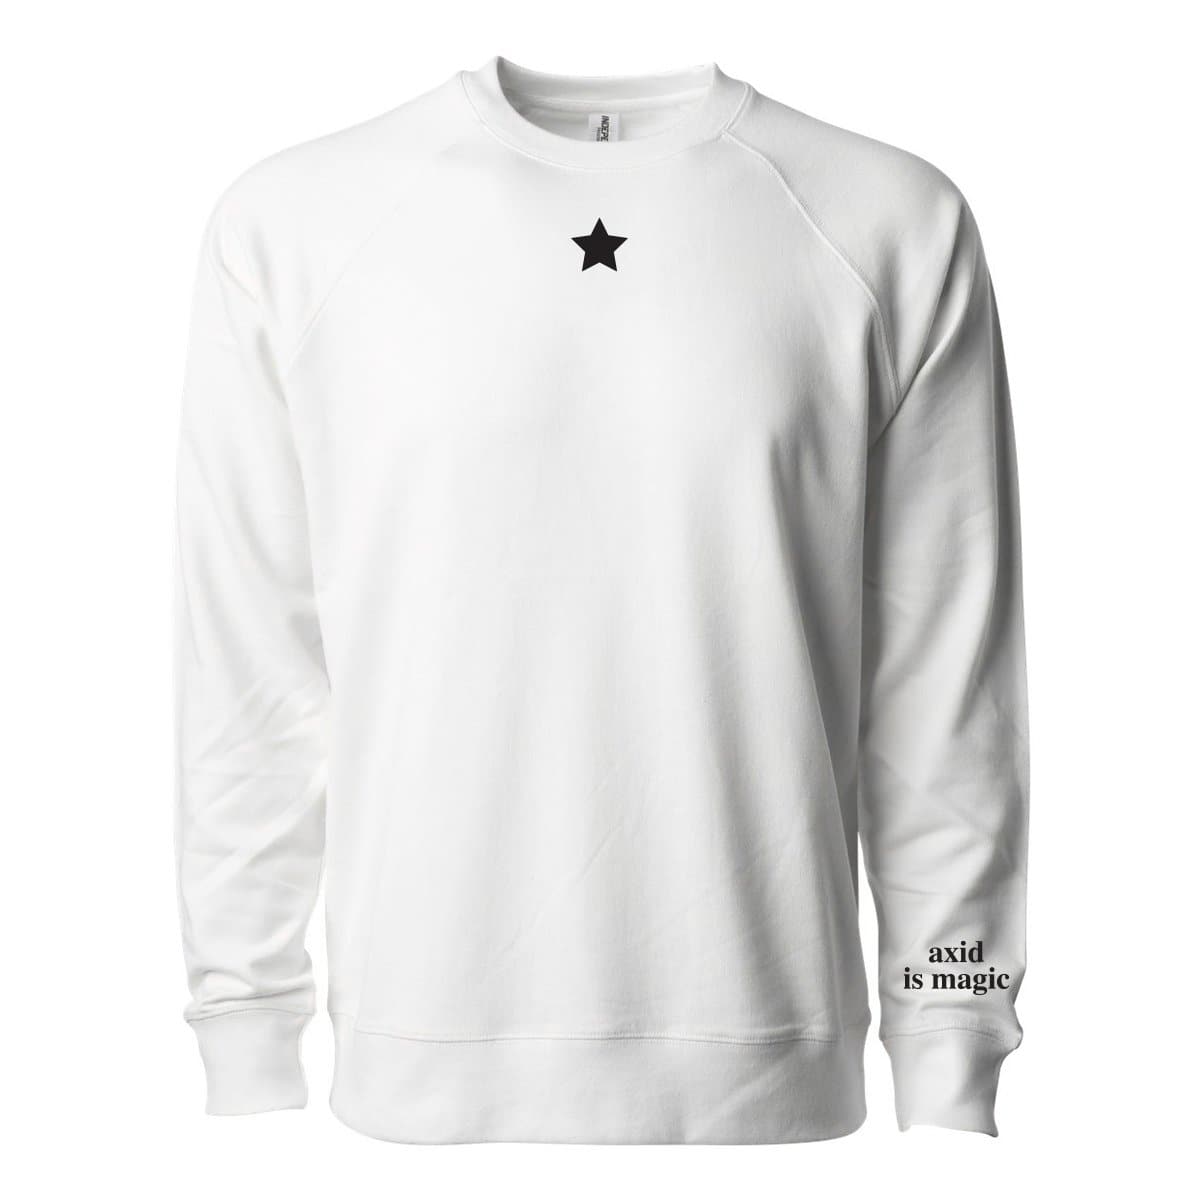 AXiD White Embroidered Magic Crewneck | Alpha Xi Delta | Sweatshirts > Crewneck sweatshirts